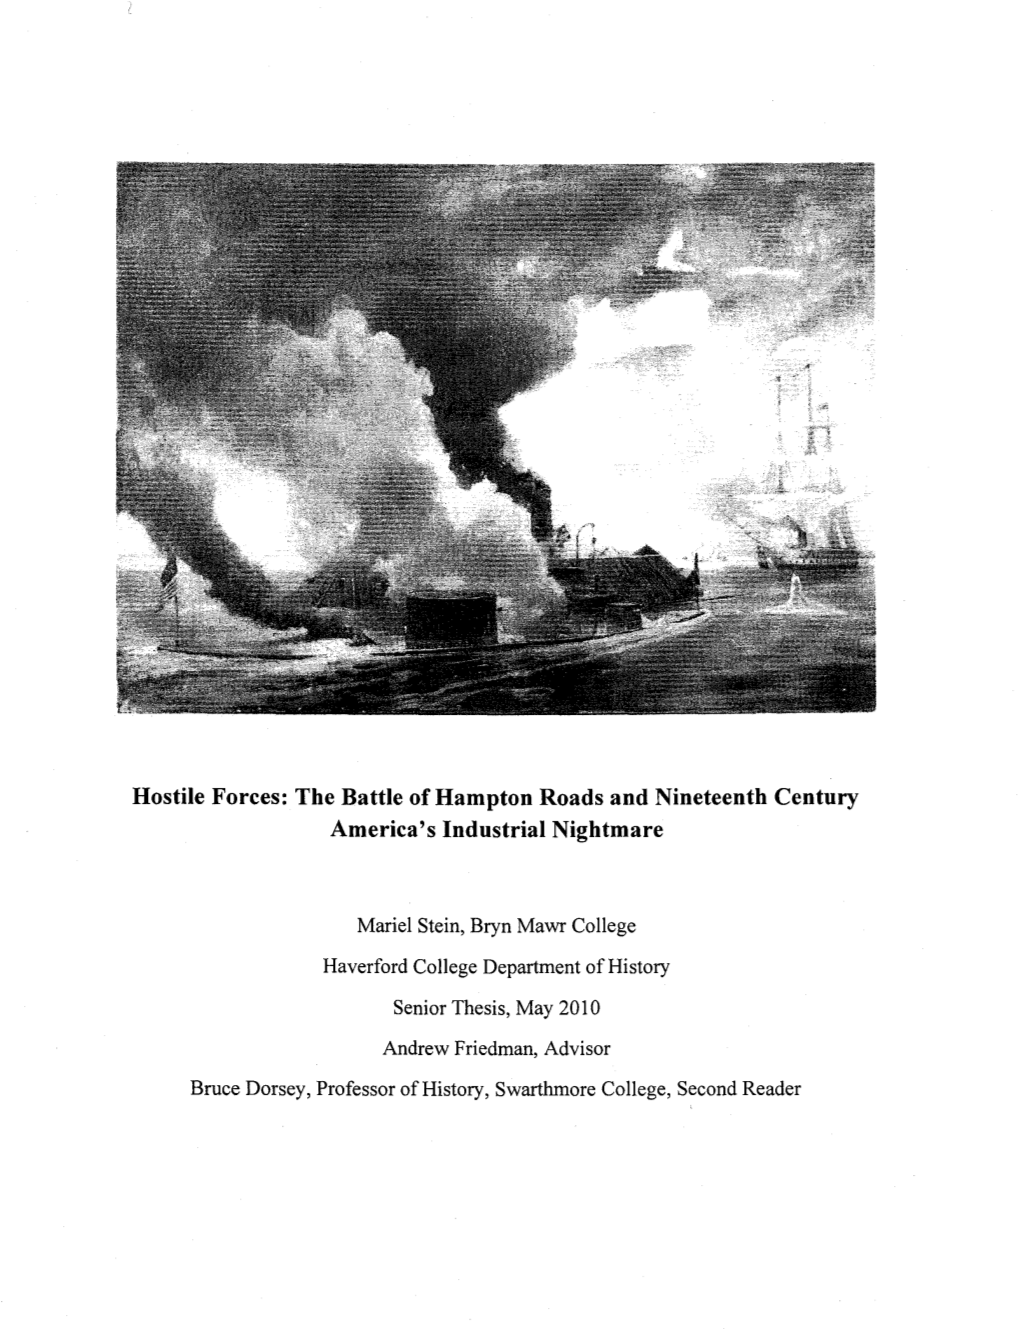 The Battle of Hampton Roads and Nineteenth Century America's Industrial Nightmare